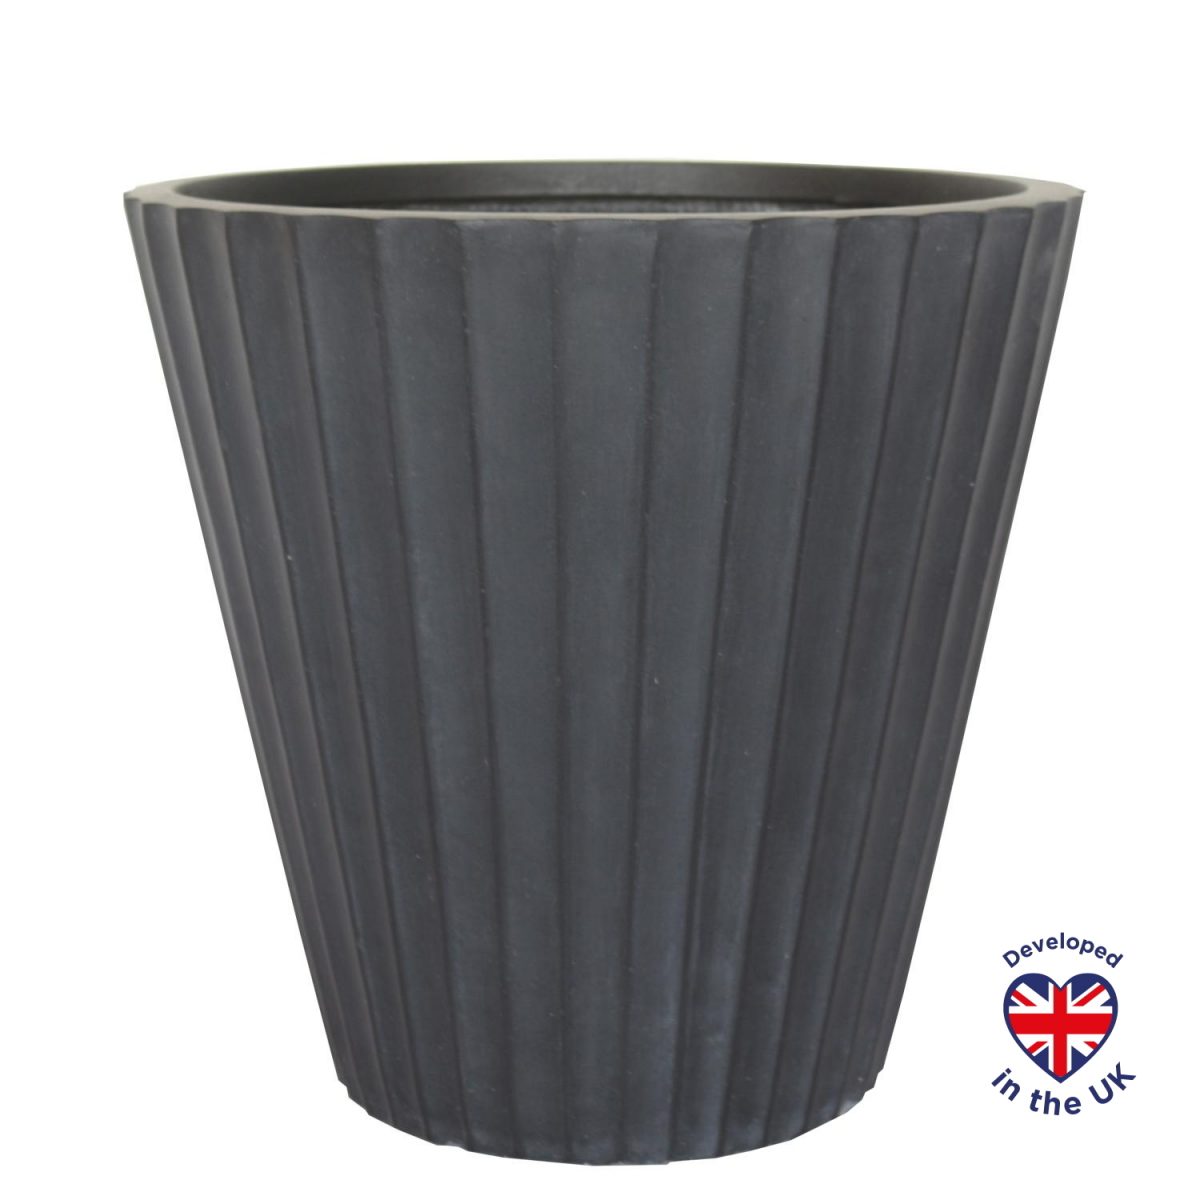 Vintage Black Ribbed Round Vase Outdoor Planter D37 H35 cm, 37.6 ltrs Cap.